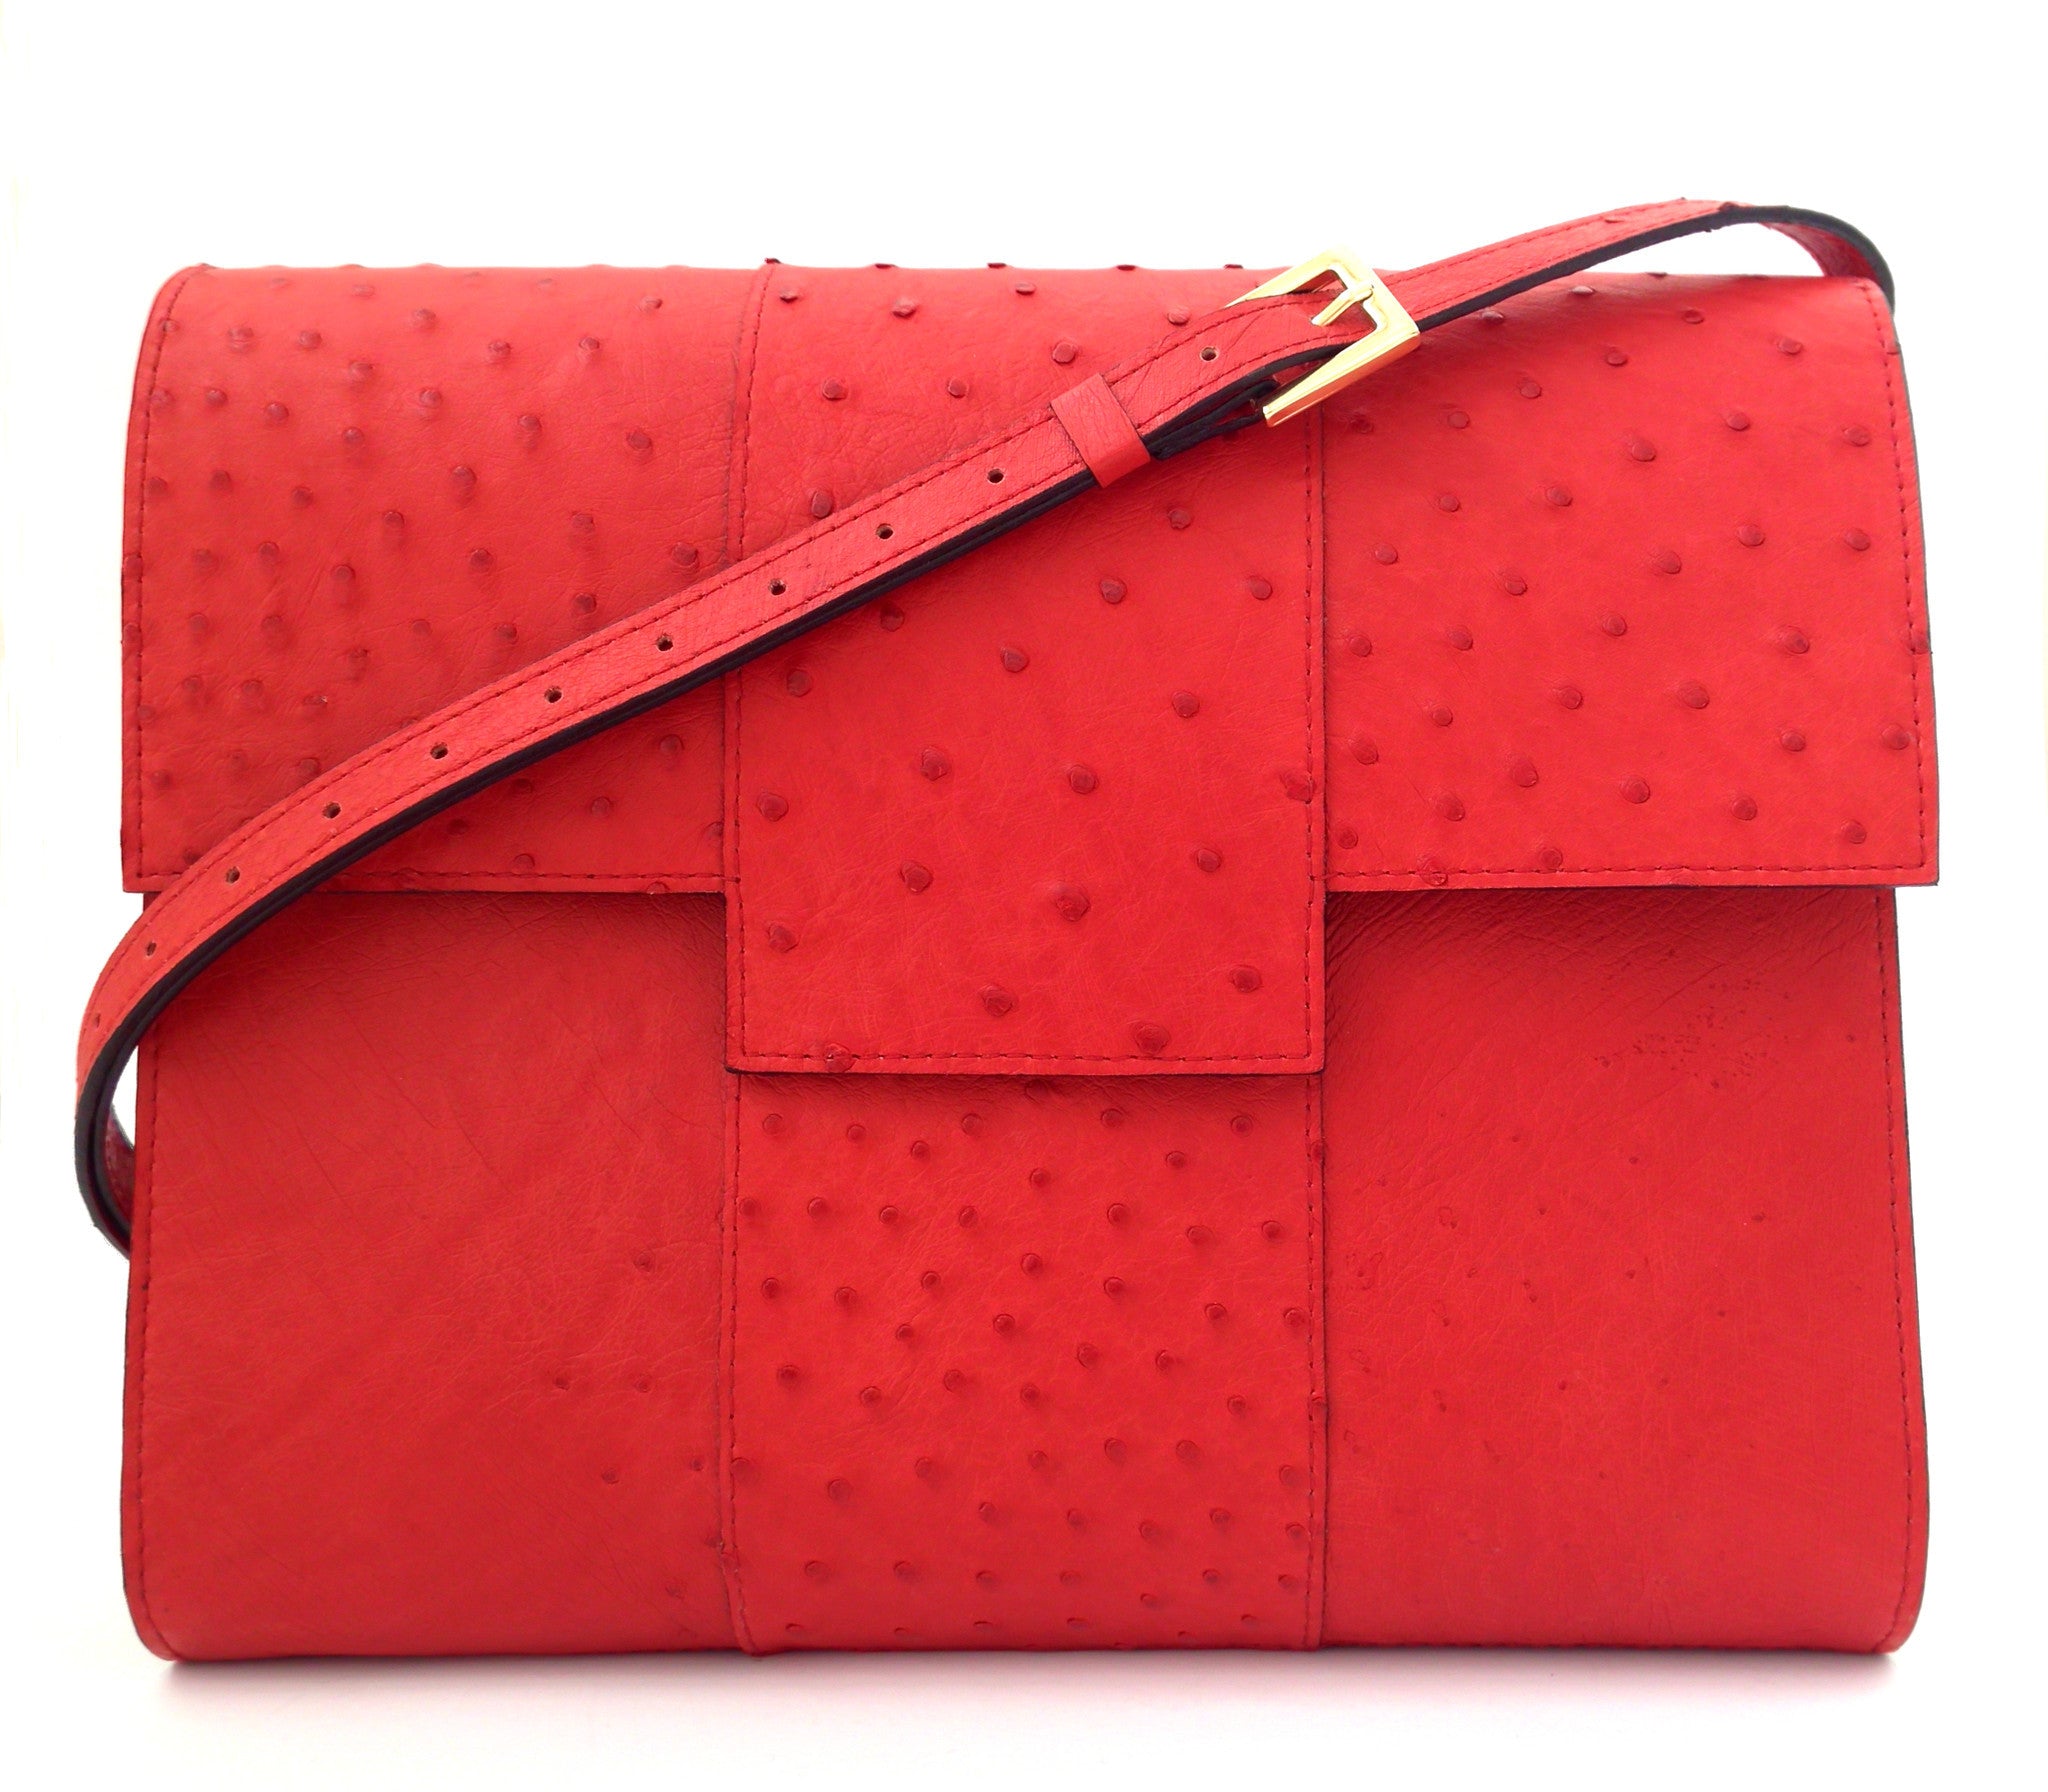 Bernice Angelique Ostrich Leather Dominatrix Bag - Red